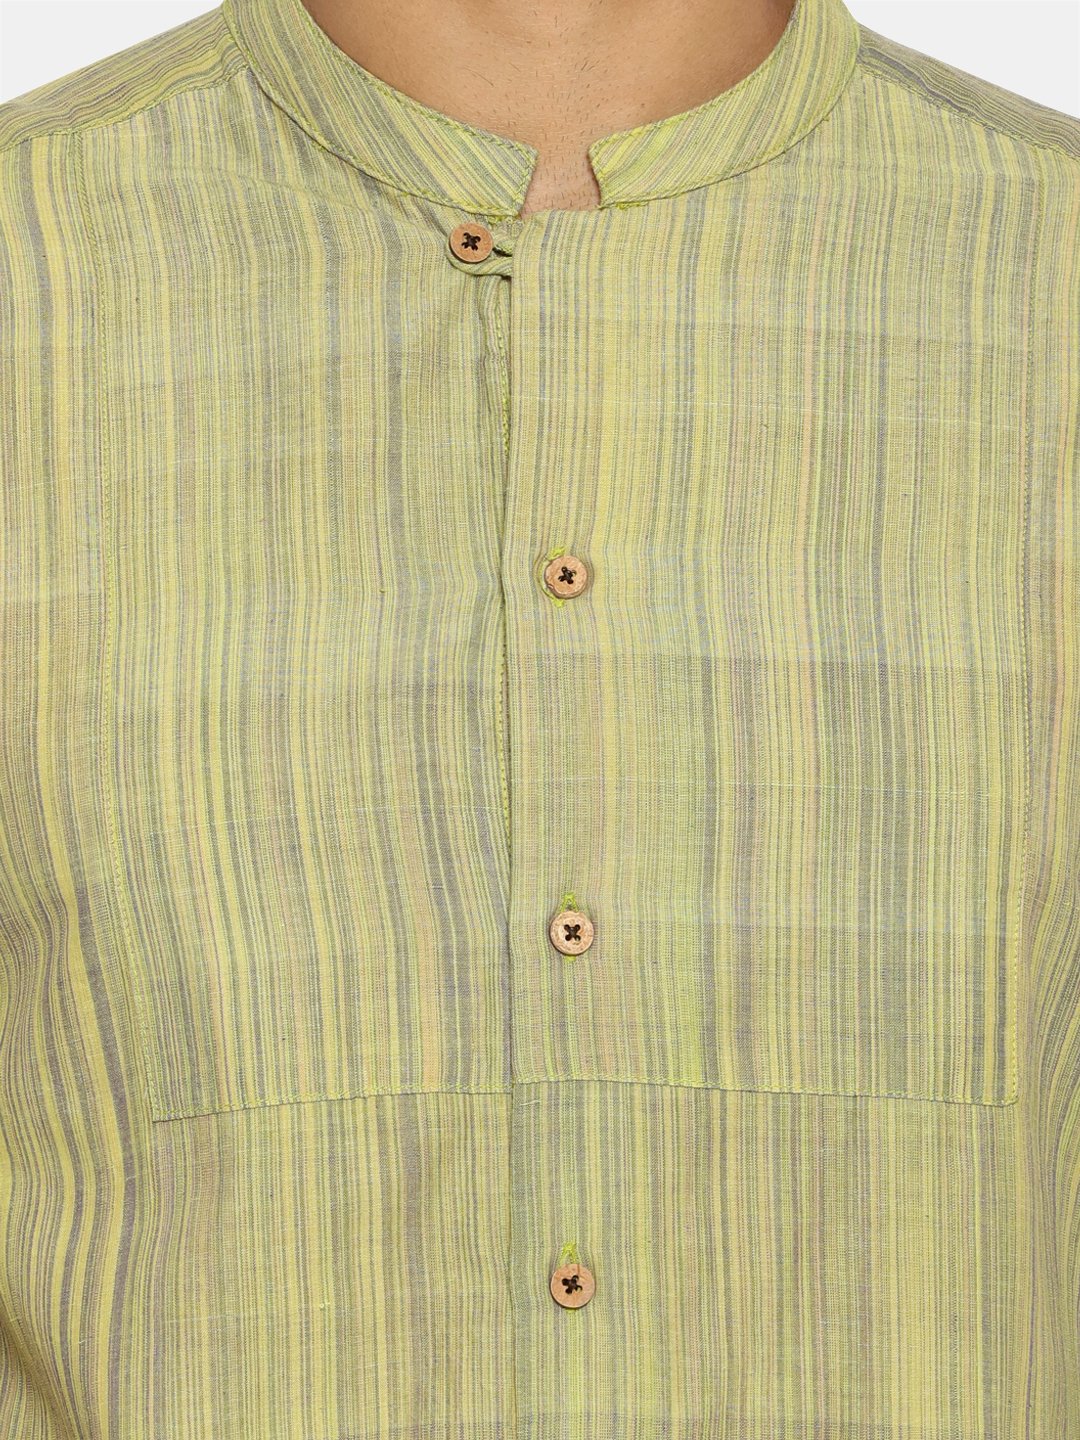 Lime green striped mandarin collared shirt